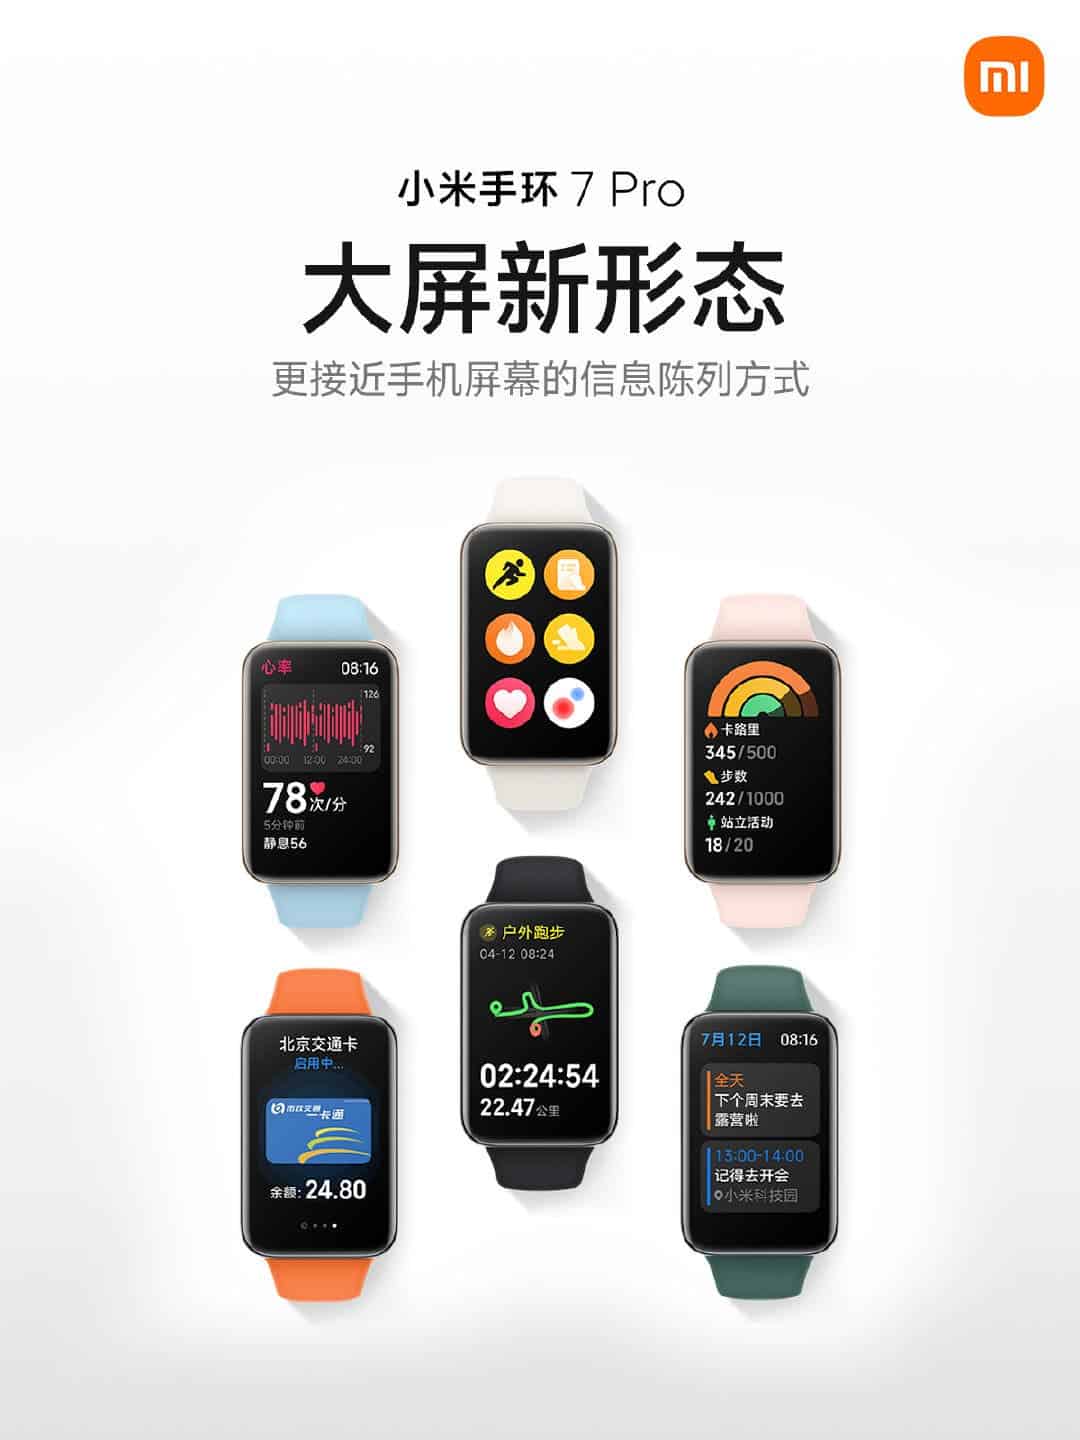 Xiaomi Mi Band 7 Pro watch faces